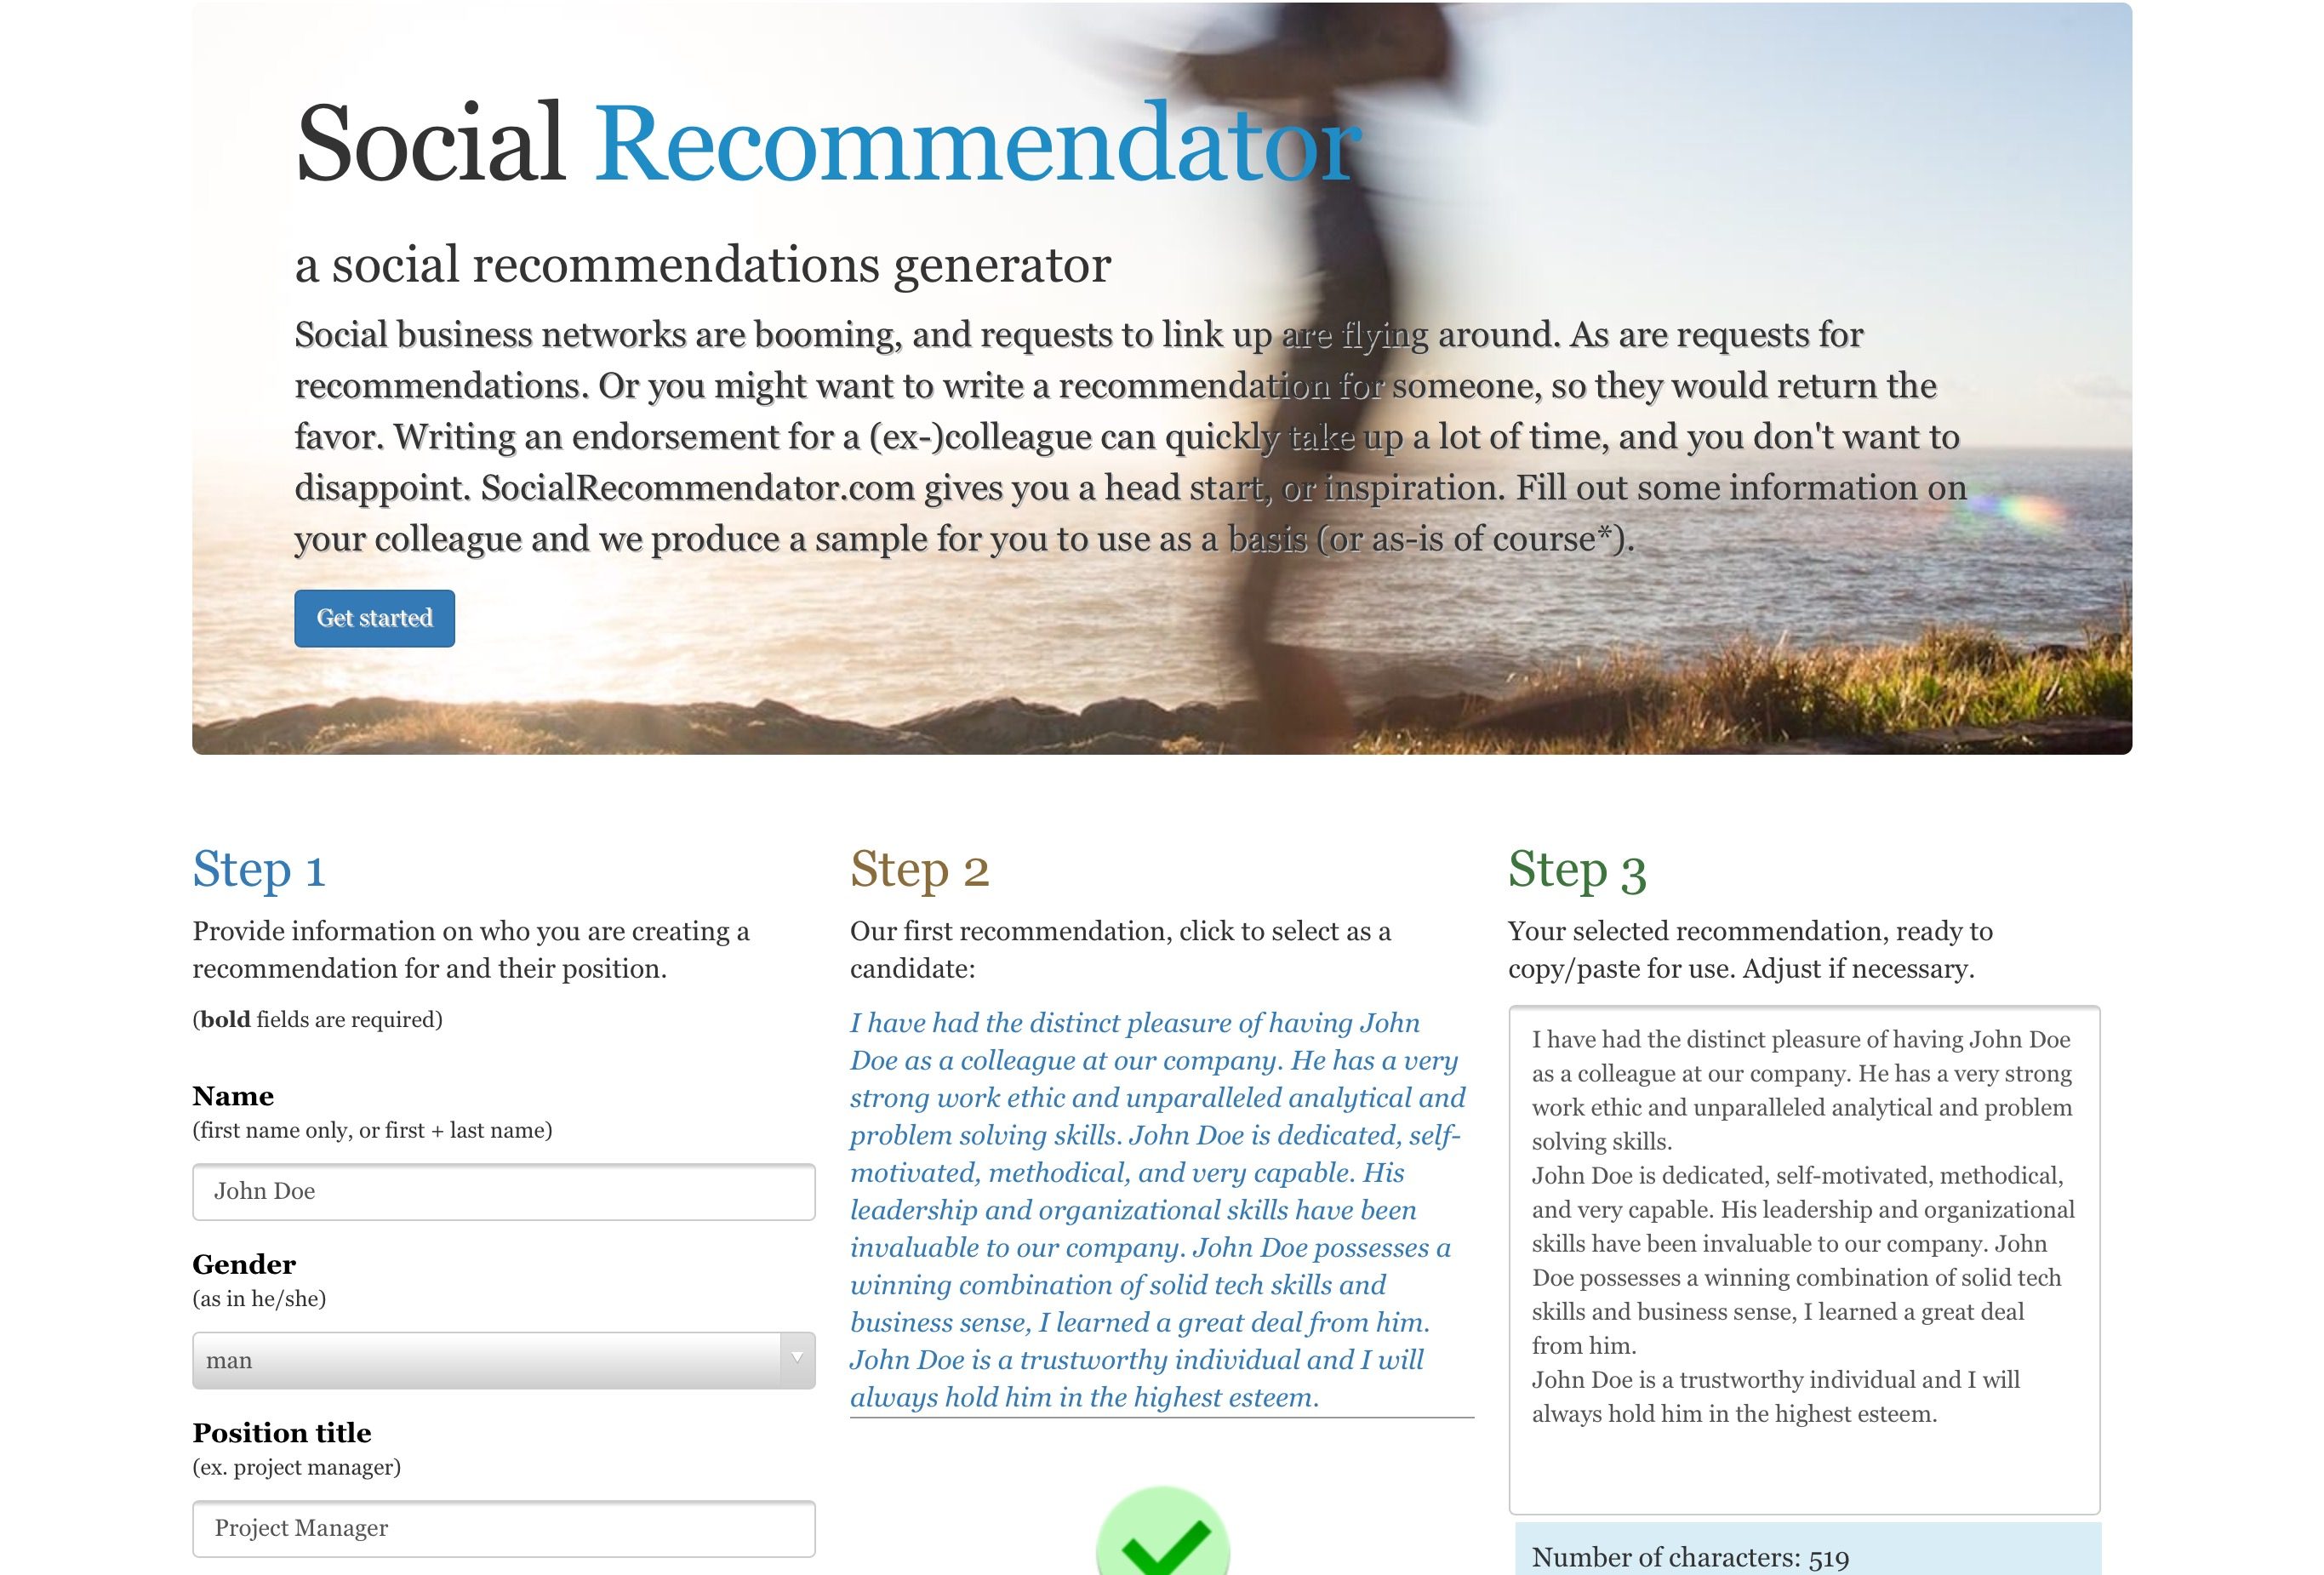 Social Recommendator